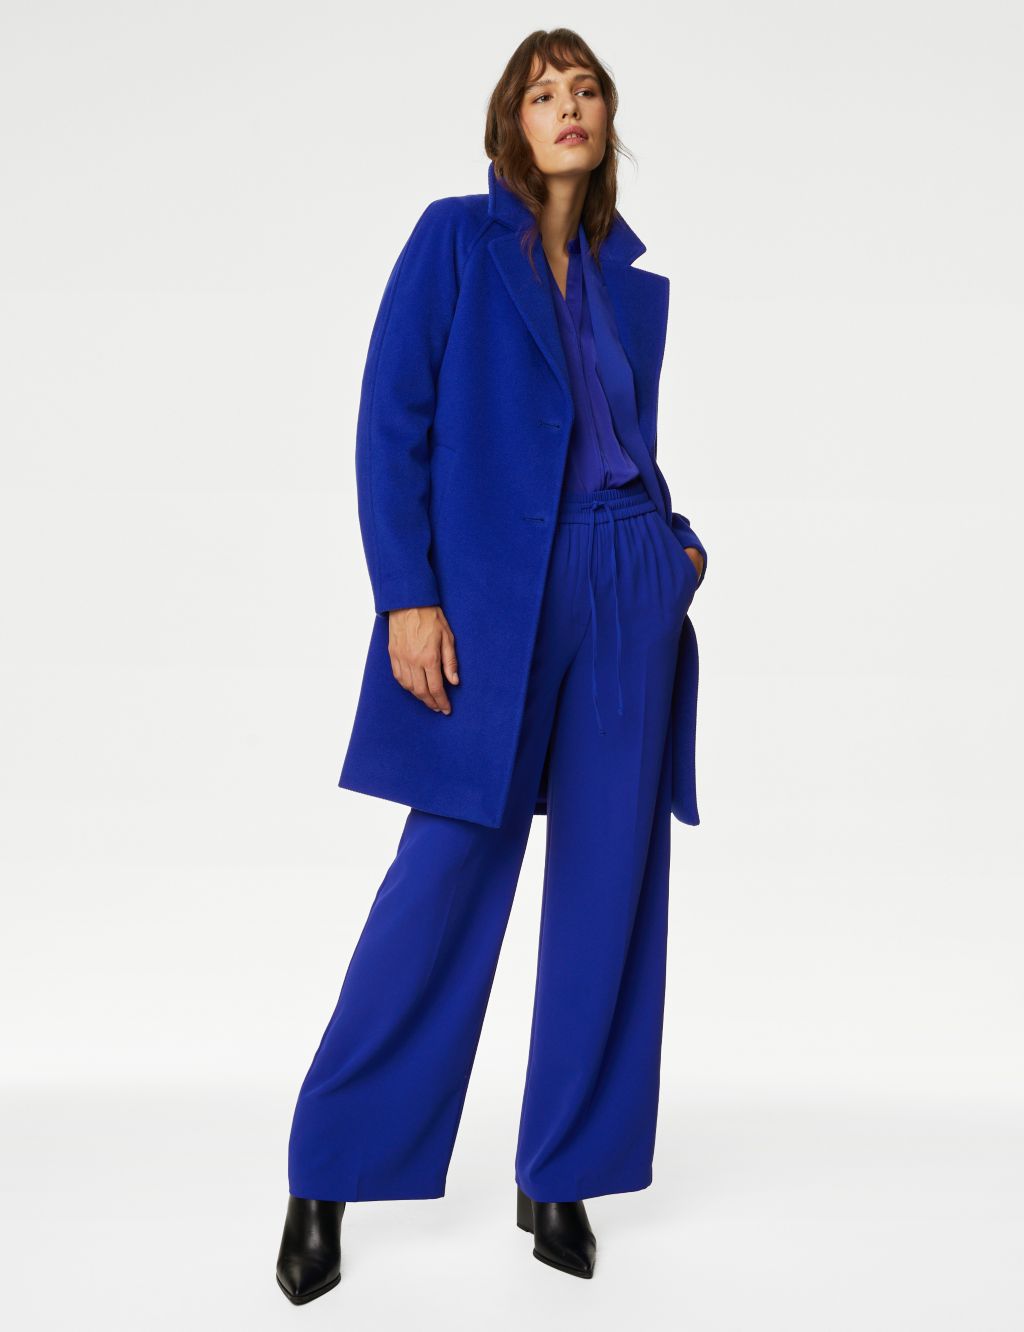 Women's Blue Coats